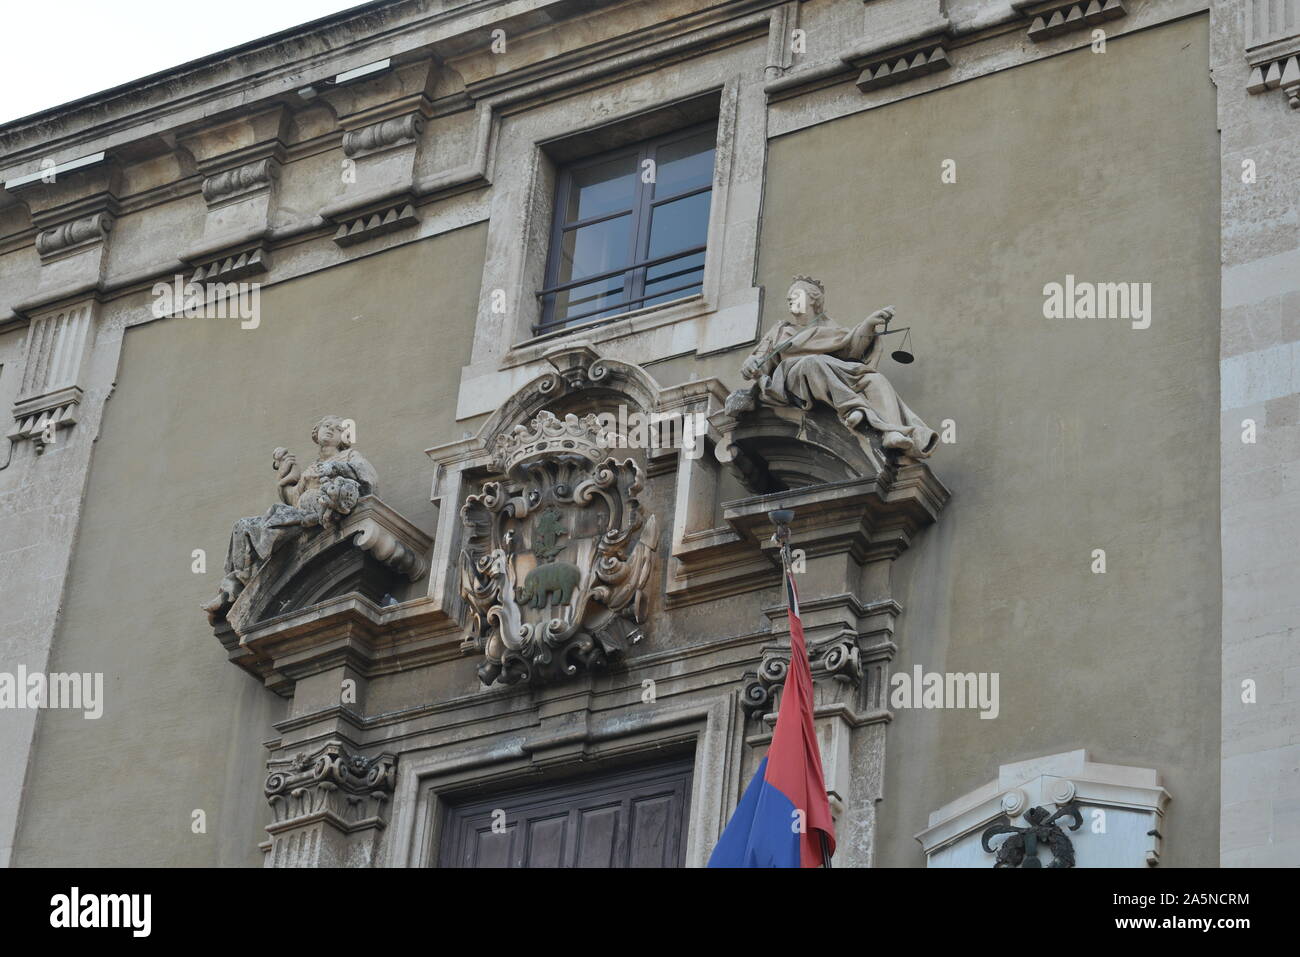 Street scenes of Catania, Sicily in Italy Stock Photo